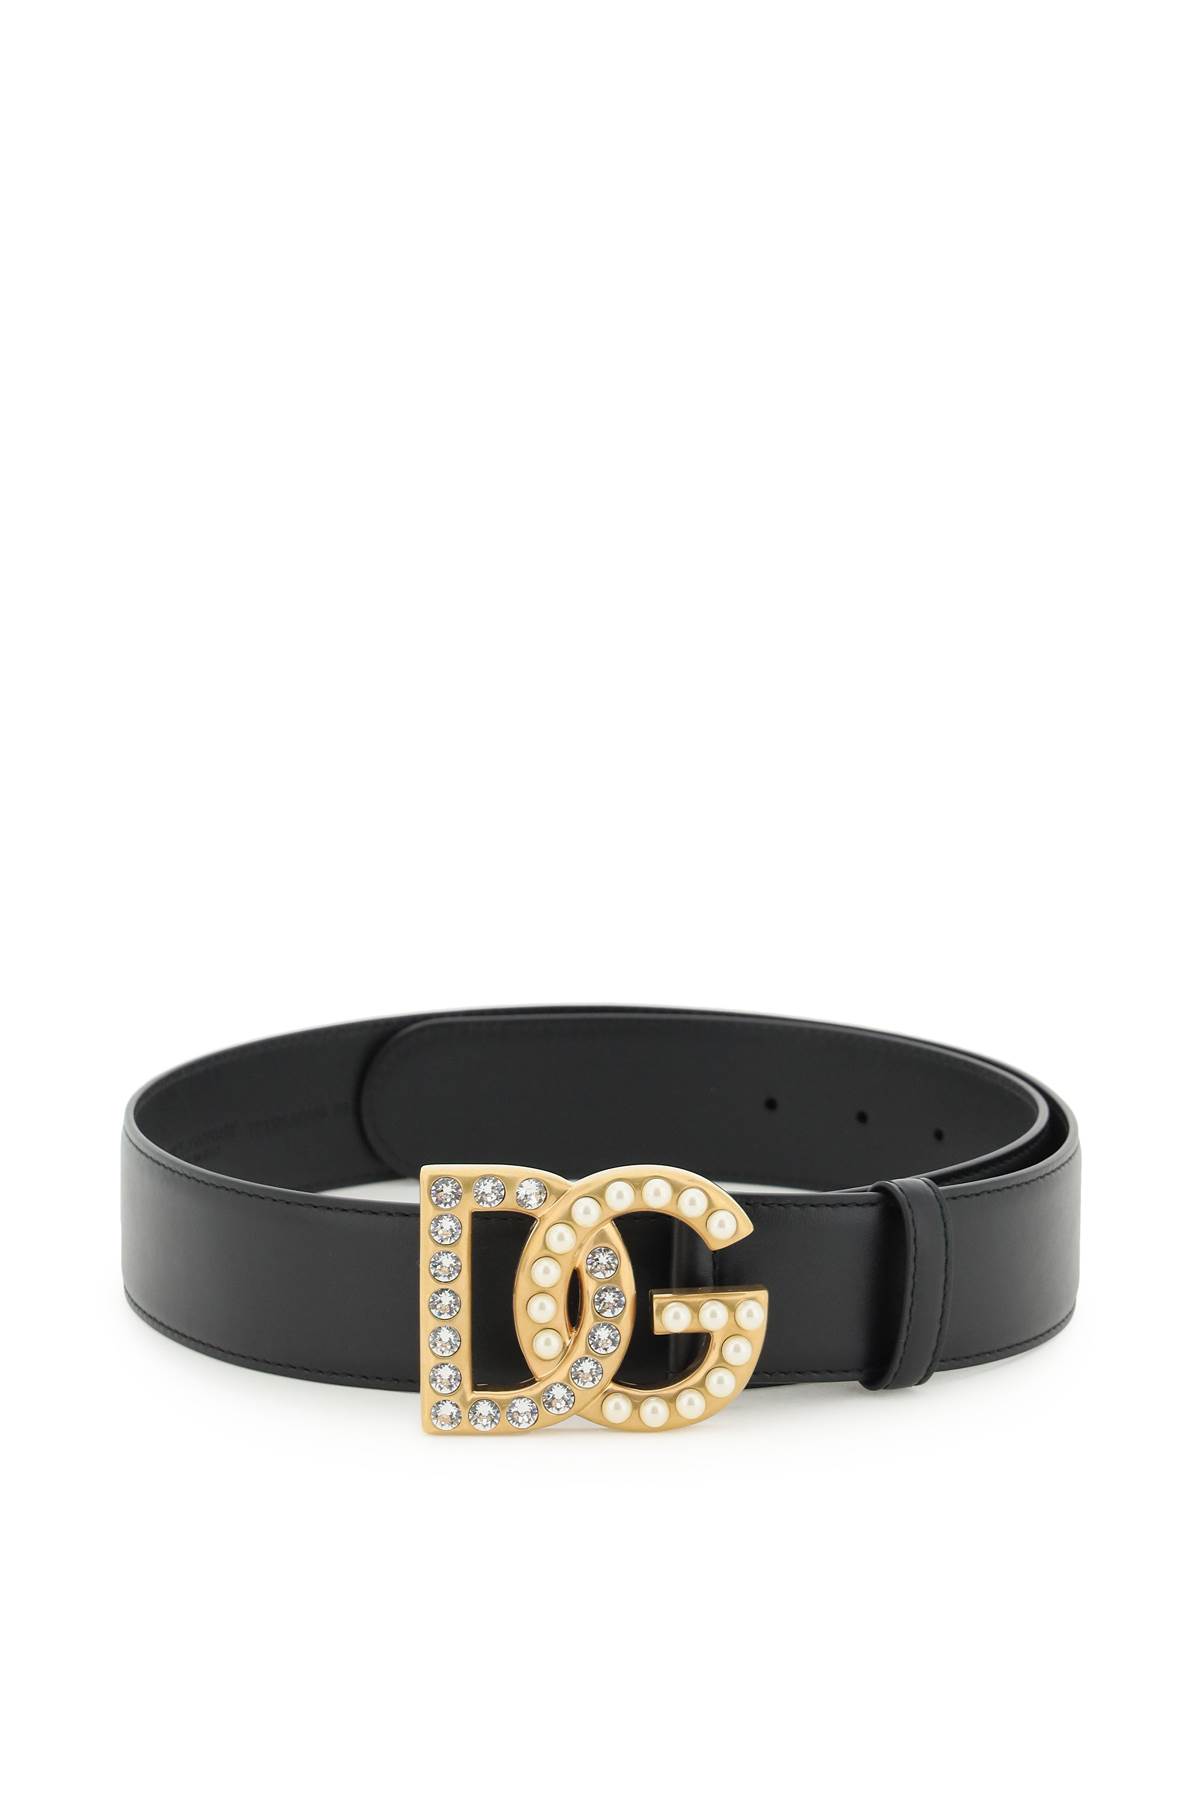 Dolce & Gabbana Dg Jewel Logo Belt